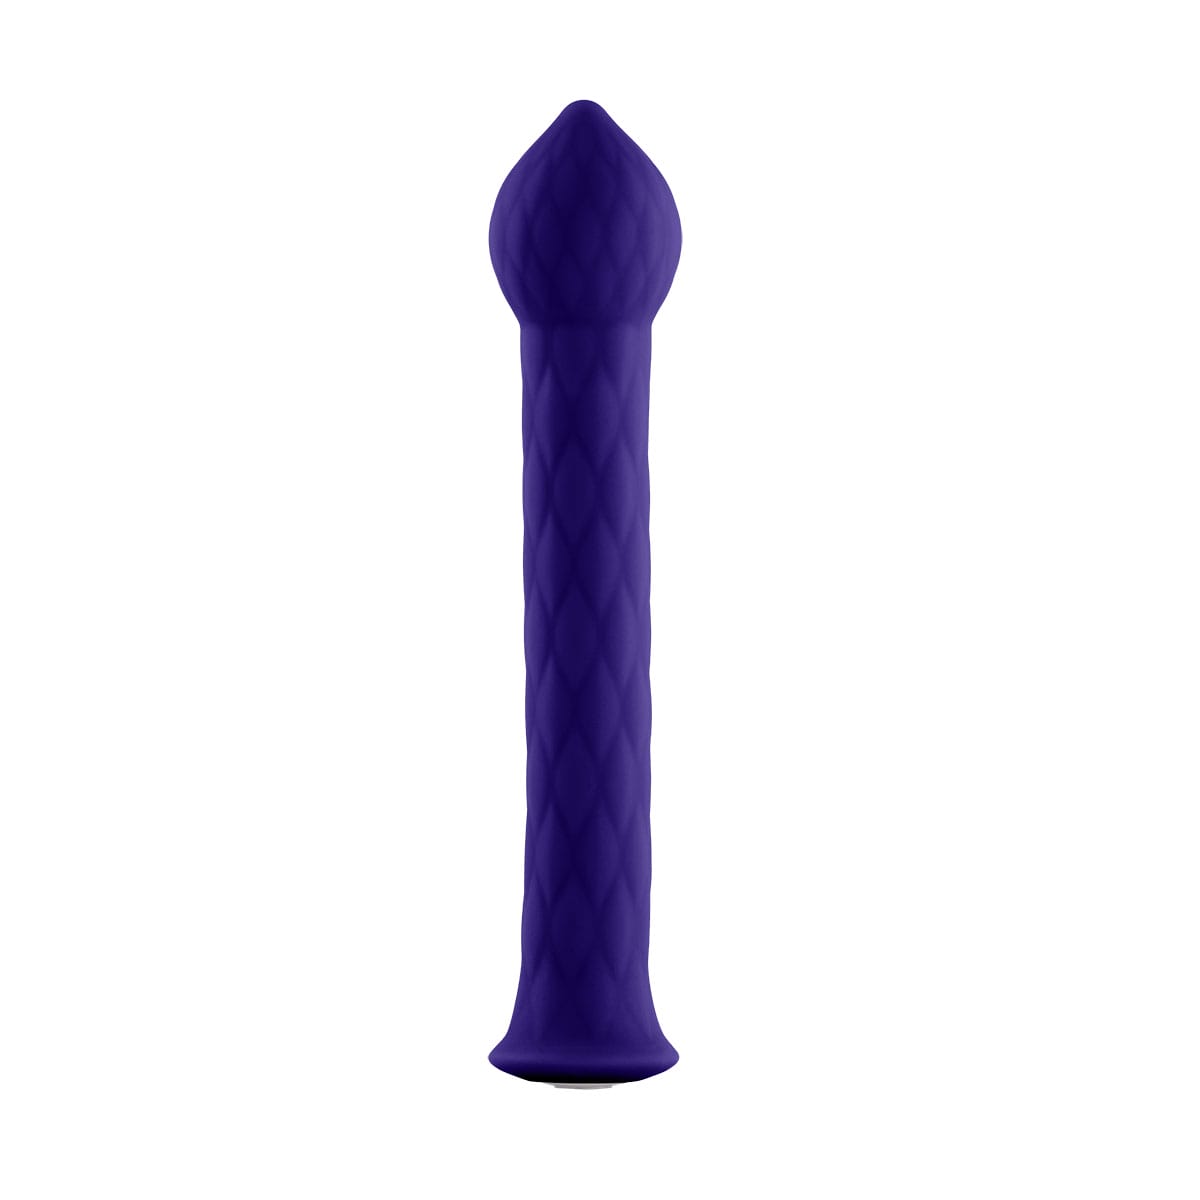 Buy a Femme Funn Diamond Wand  Dark Purple vibrator.